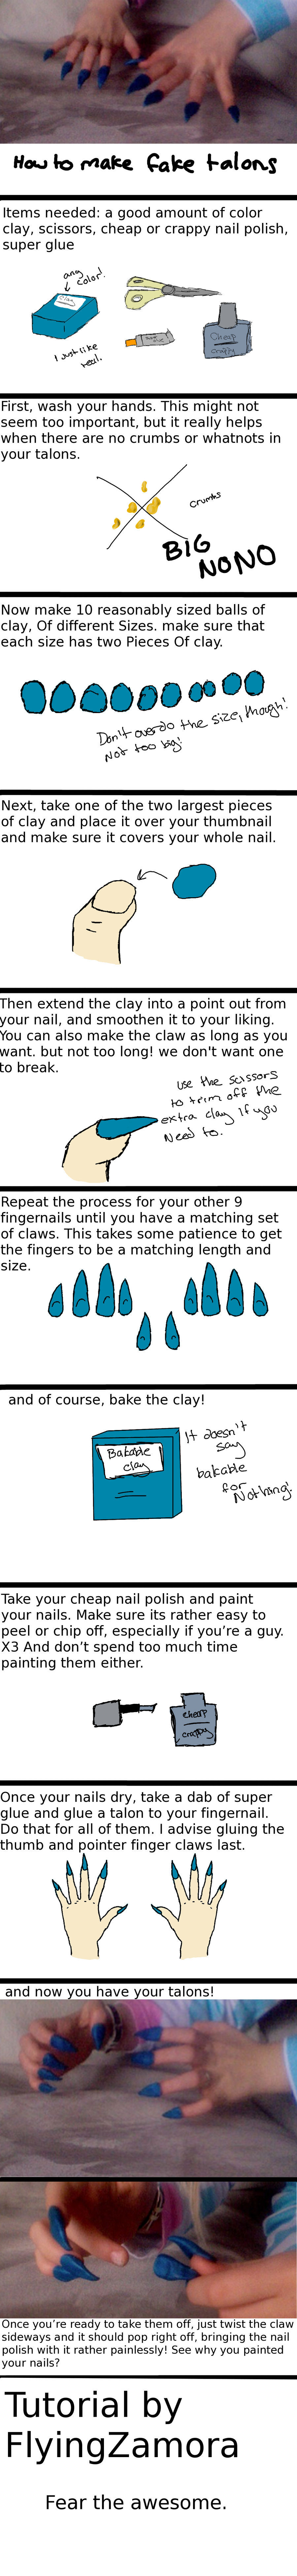 how to make fake talons